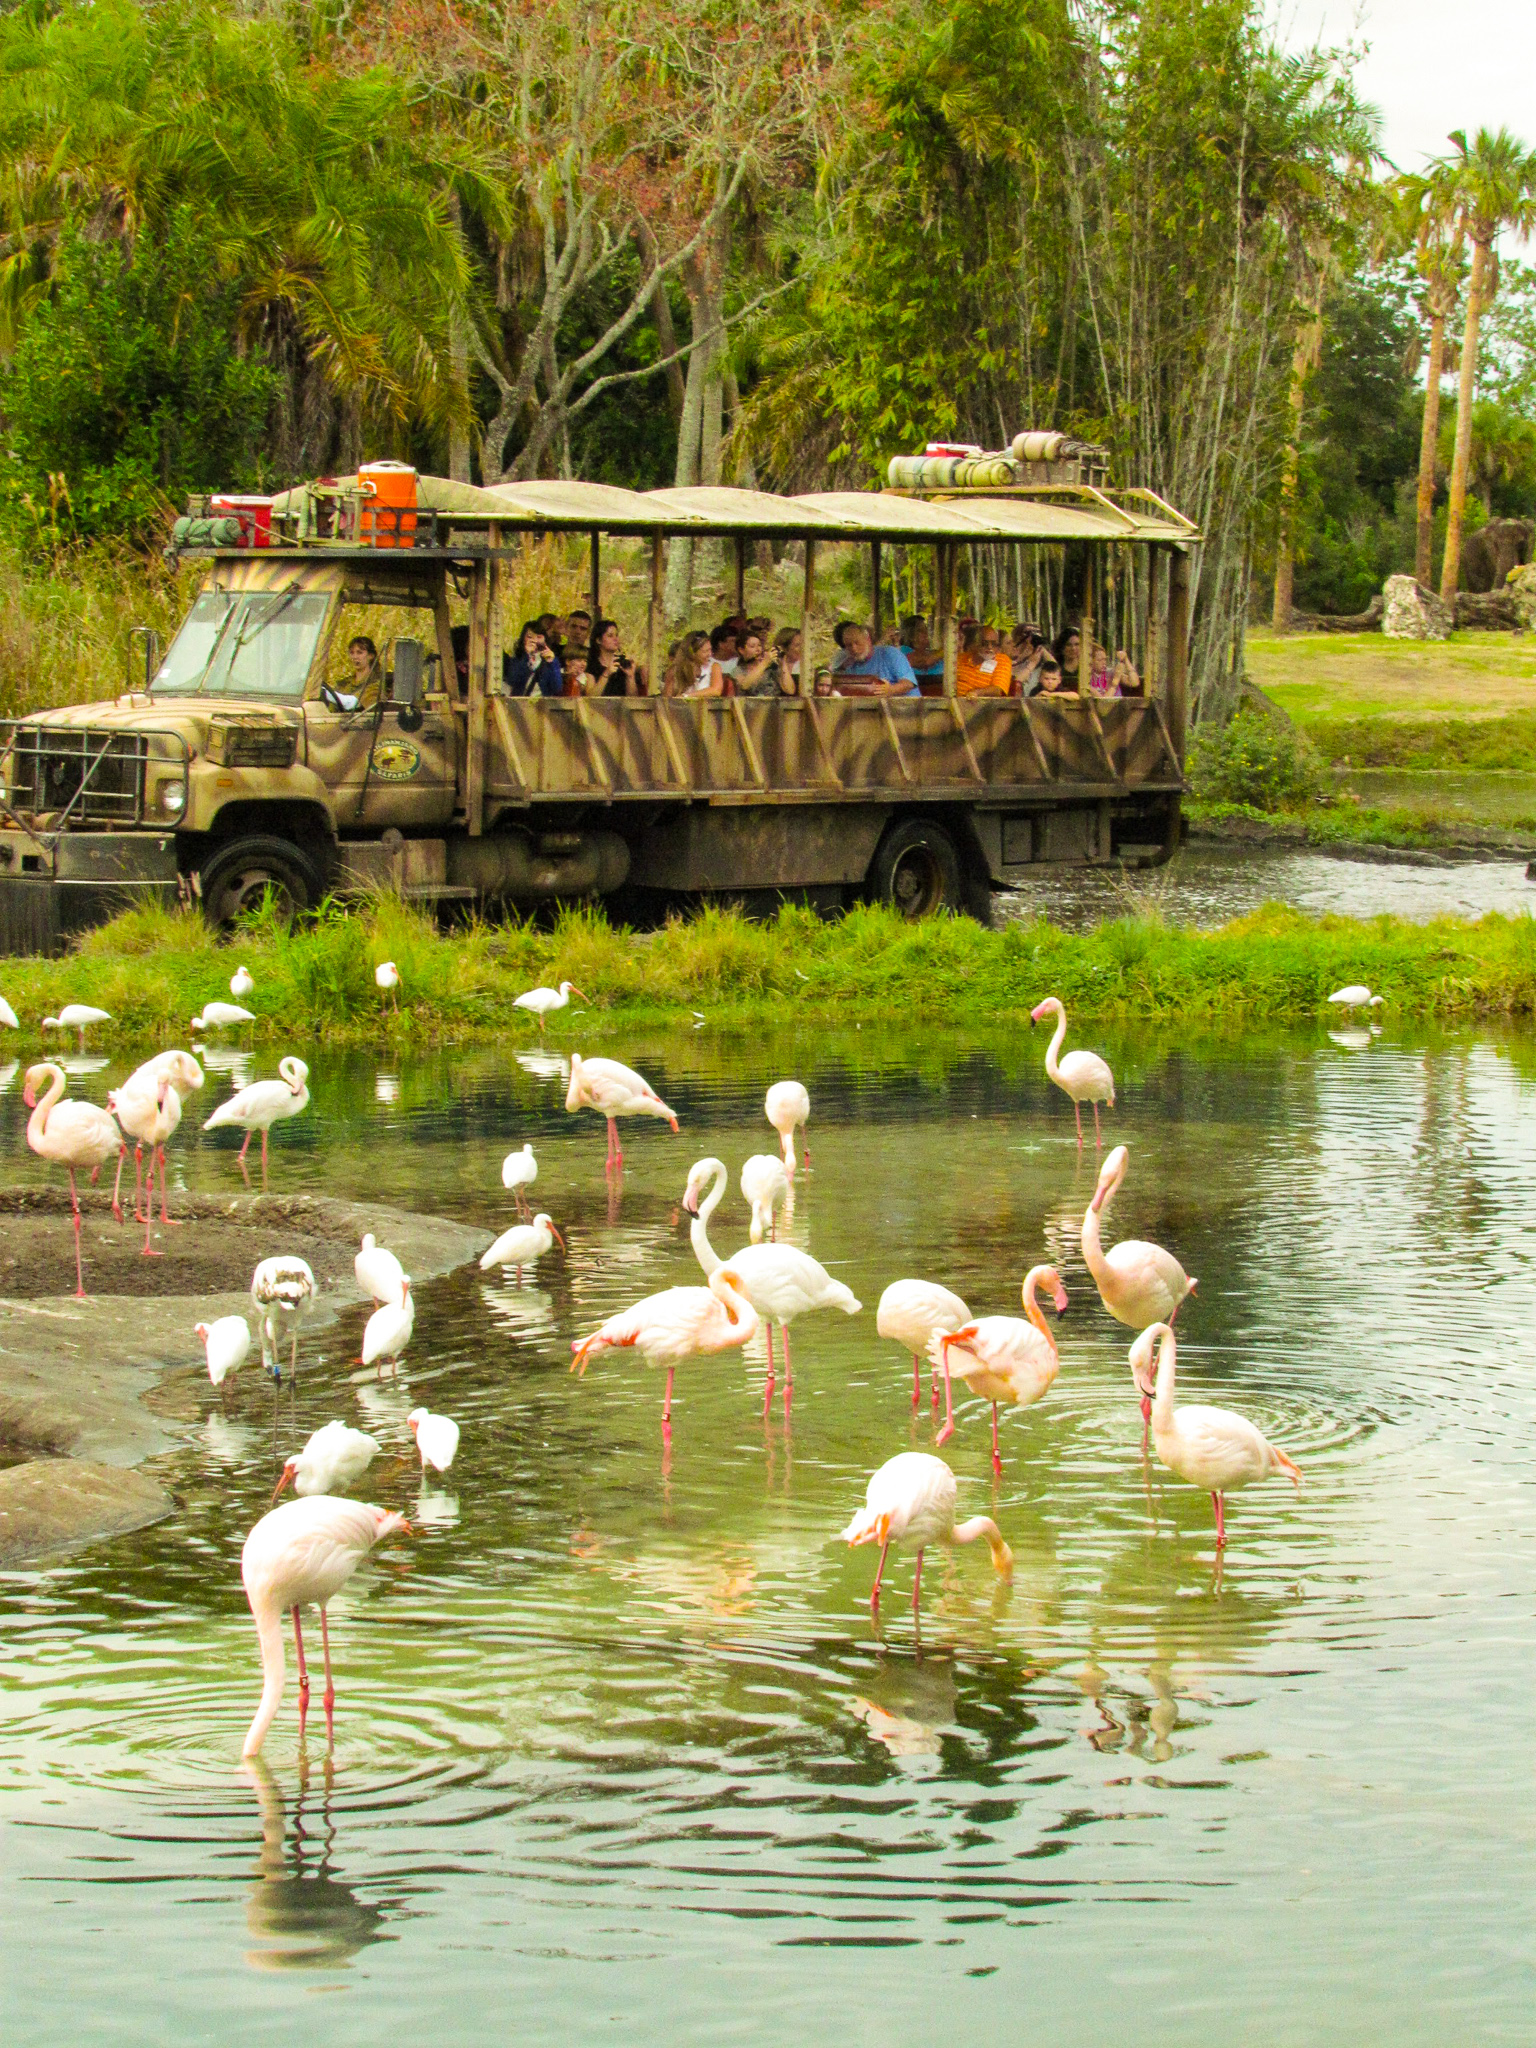 Kilimanjaro Safari truck passengers viewing flamingos